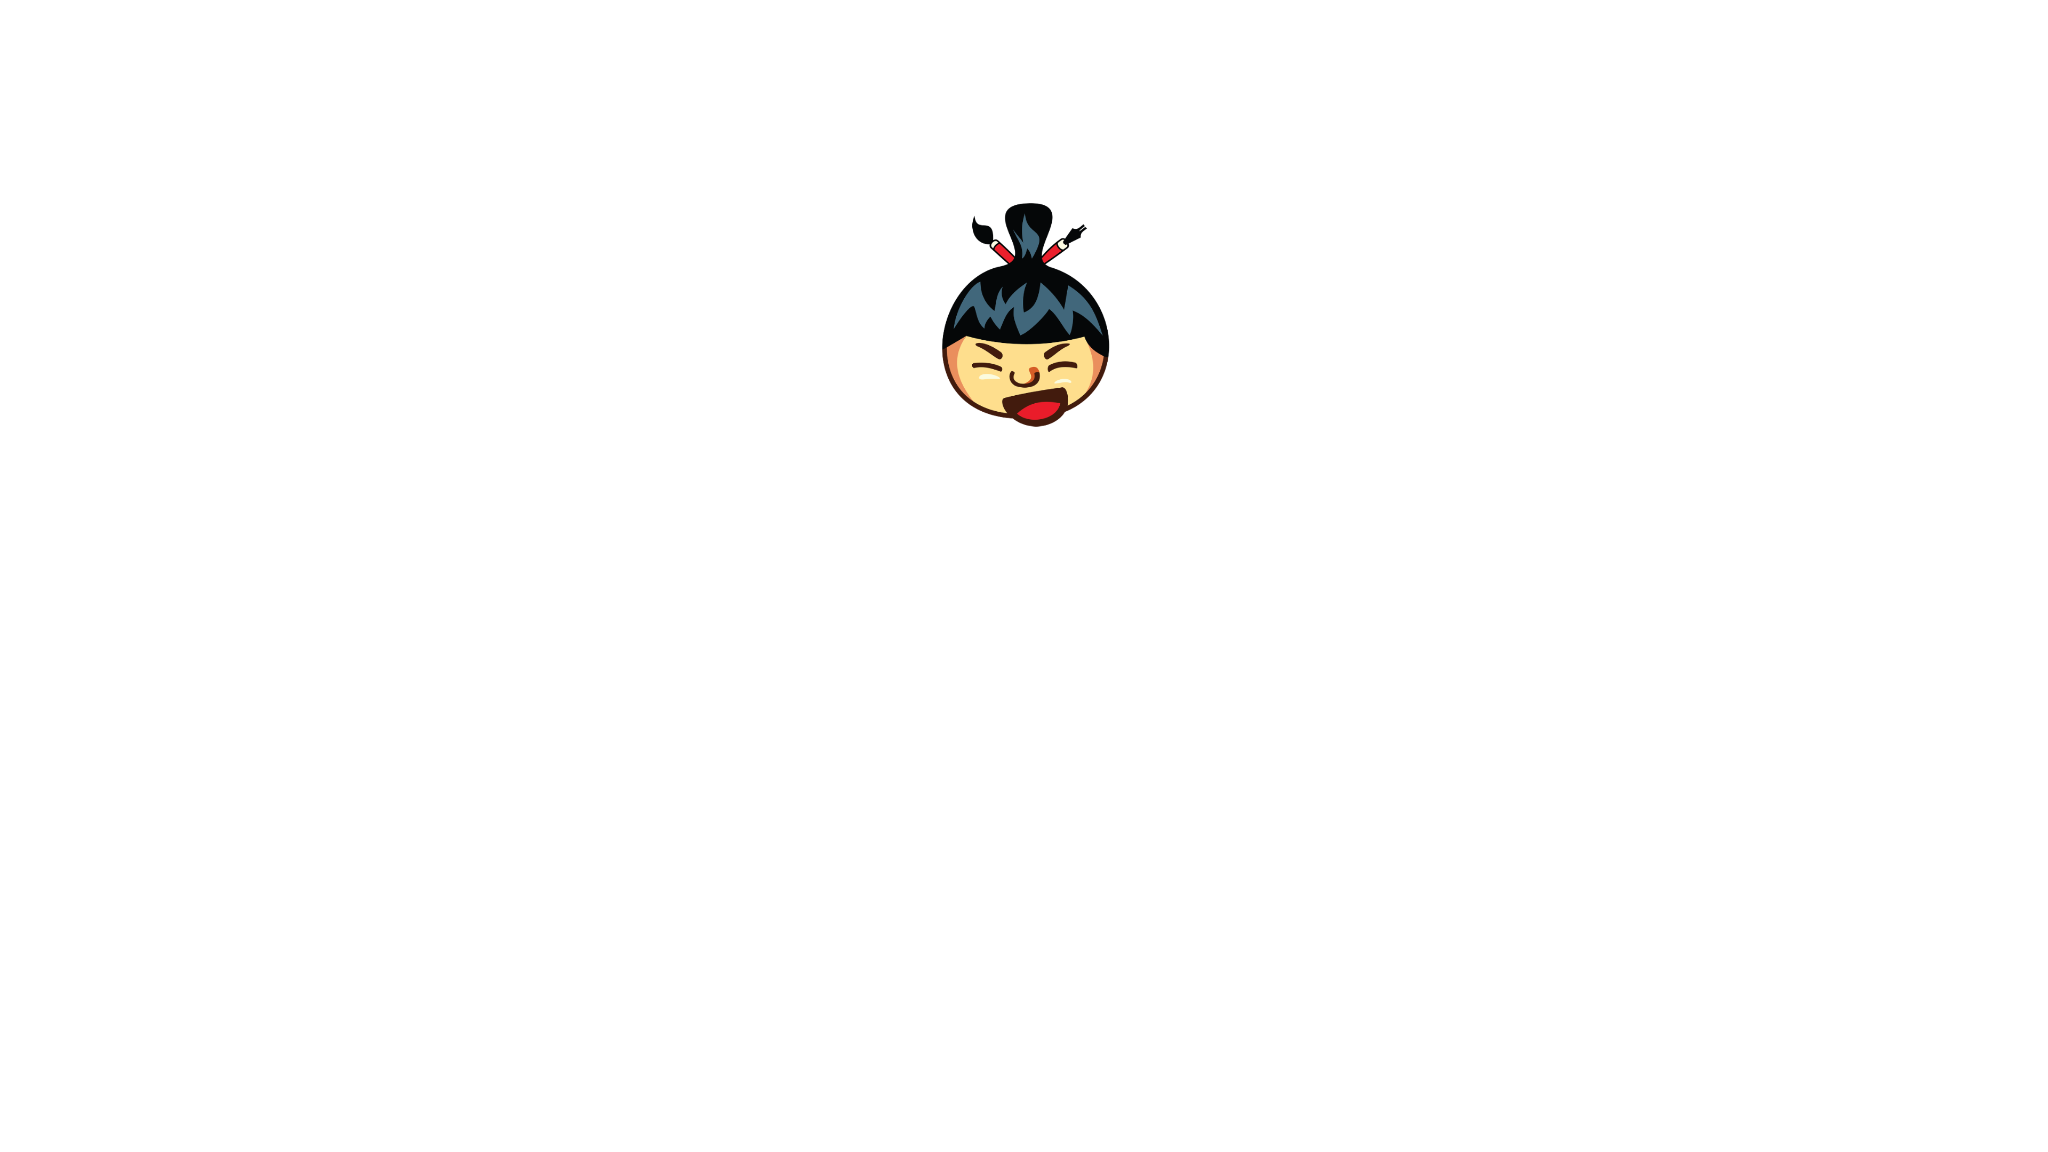 Sumo Video Intro - ایجاد شده توسط Lauri Koutaniemi با paint